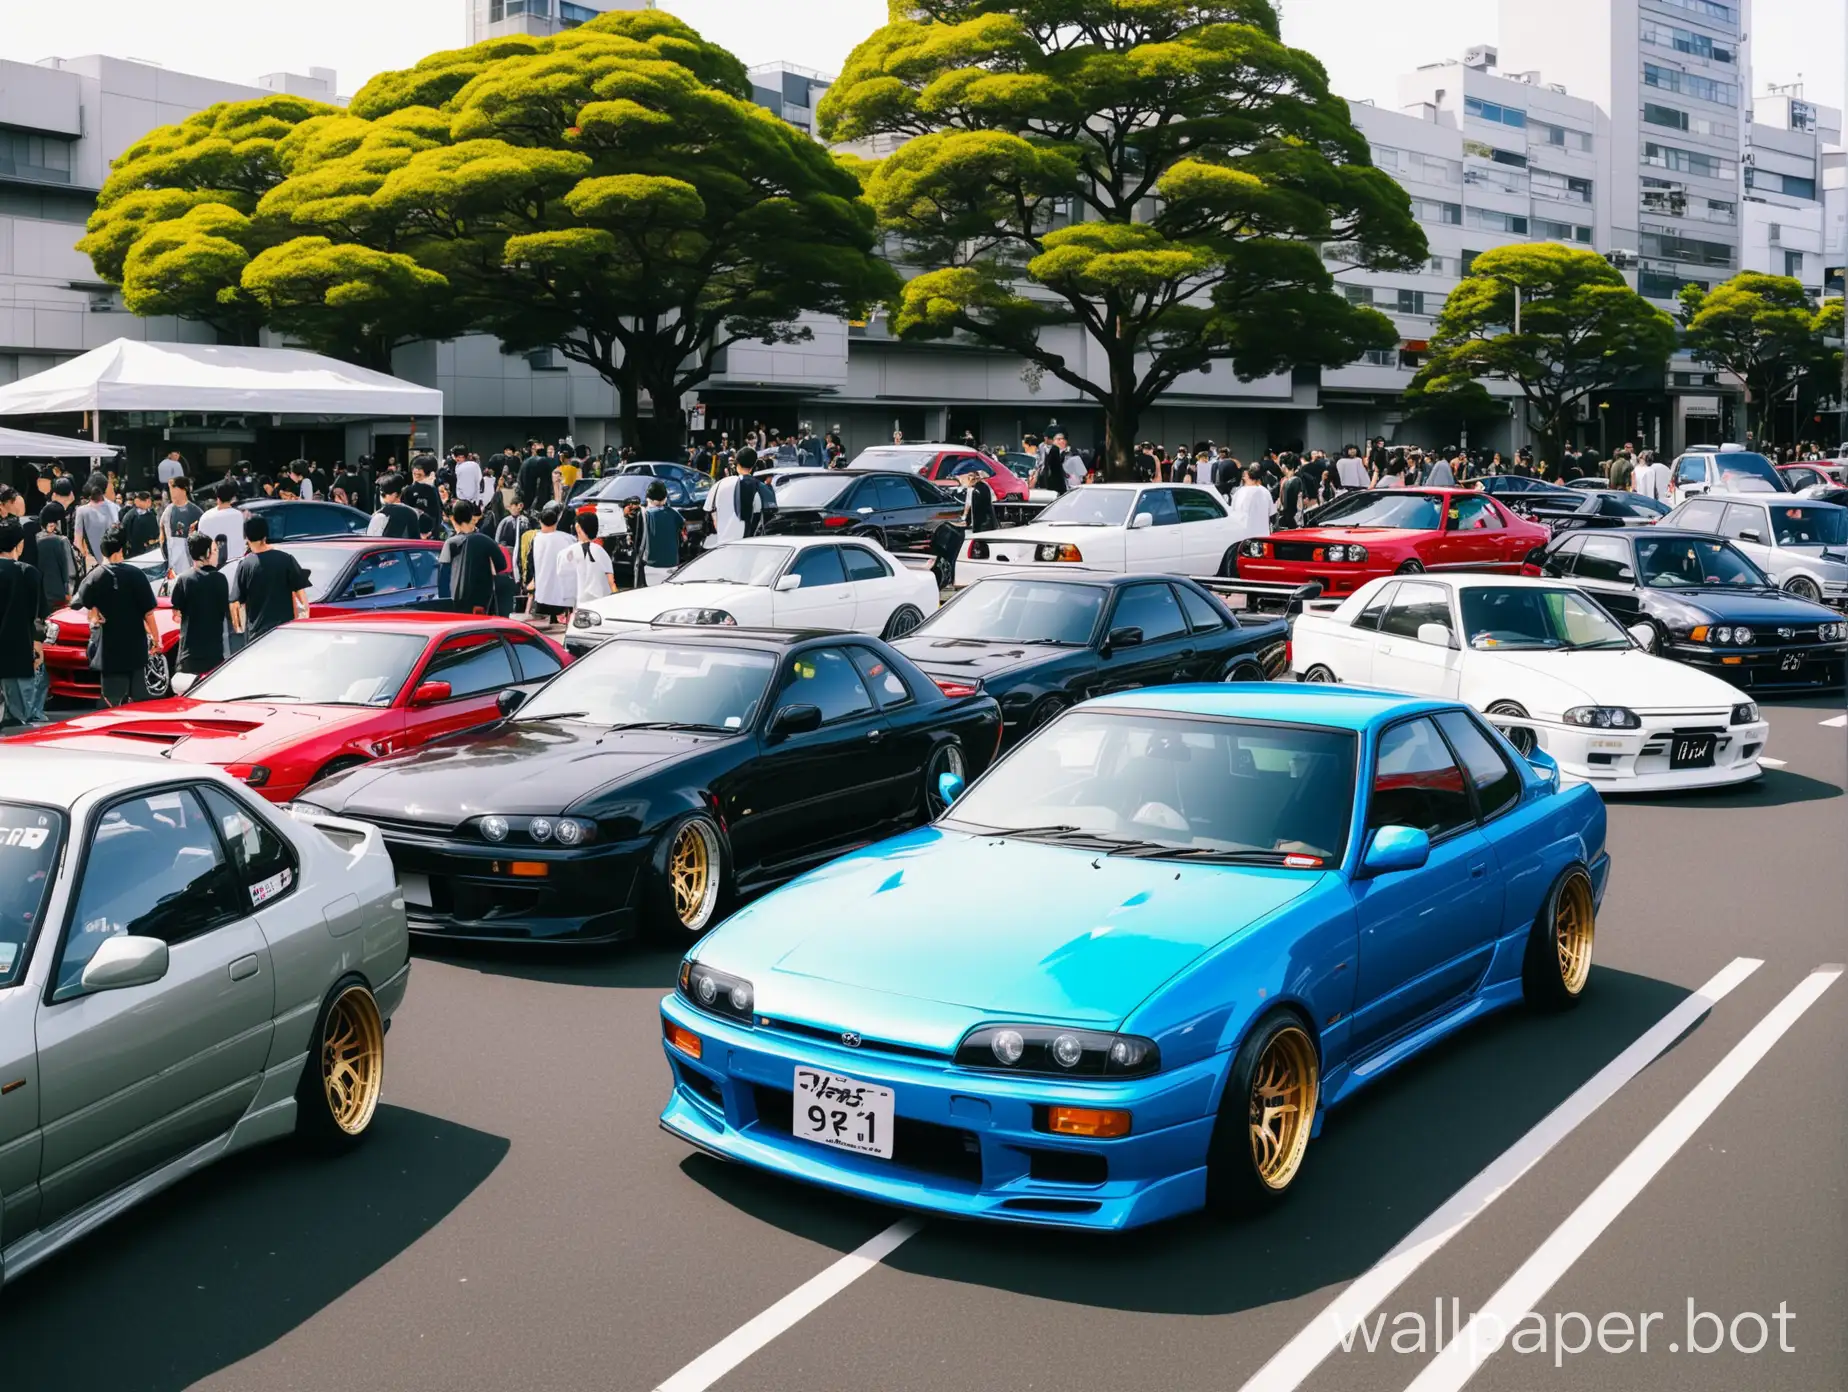 jdm cars in tokyo city at a car meetup